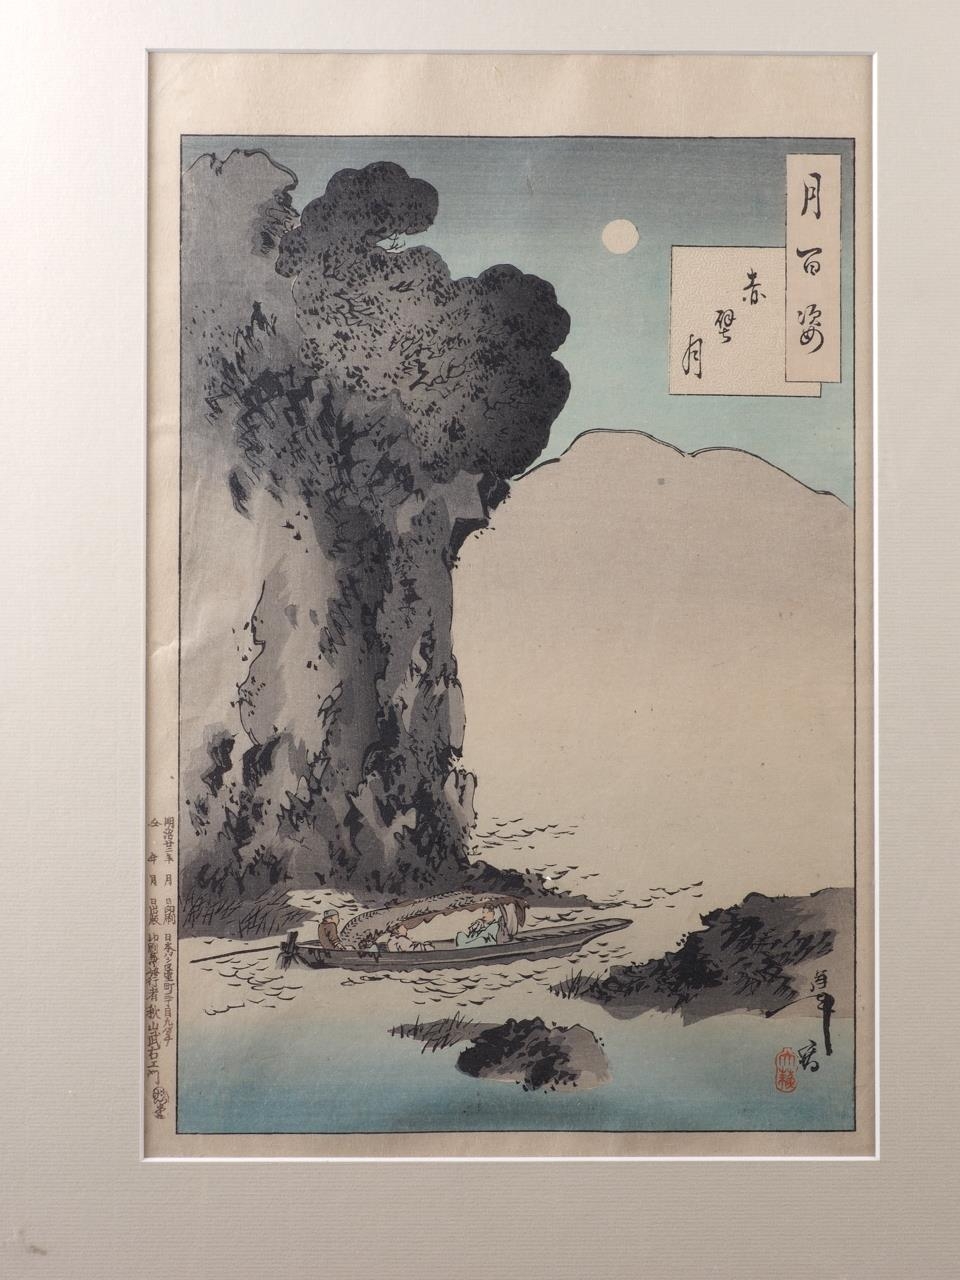 Tsukioka Yoshitoshi: a Japanese woodblock, "Moon at Red Cliffs", 1889, in ebonised strip frame